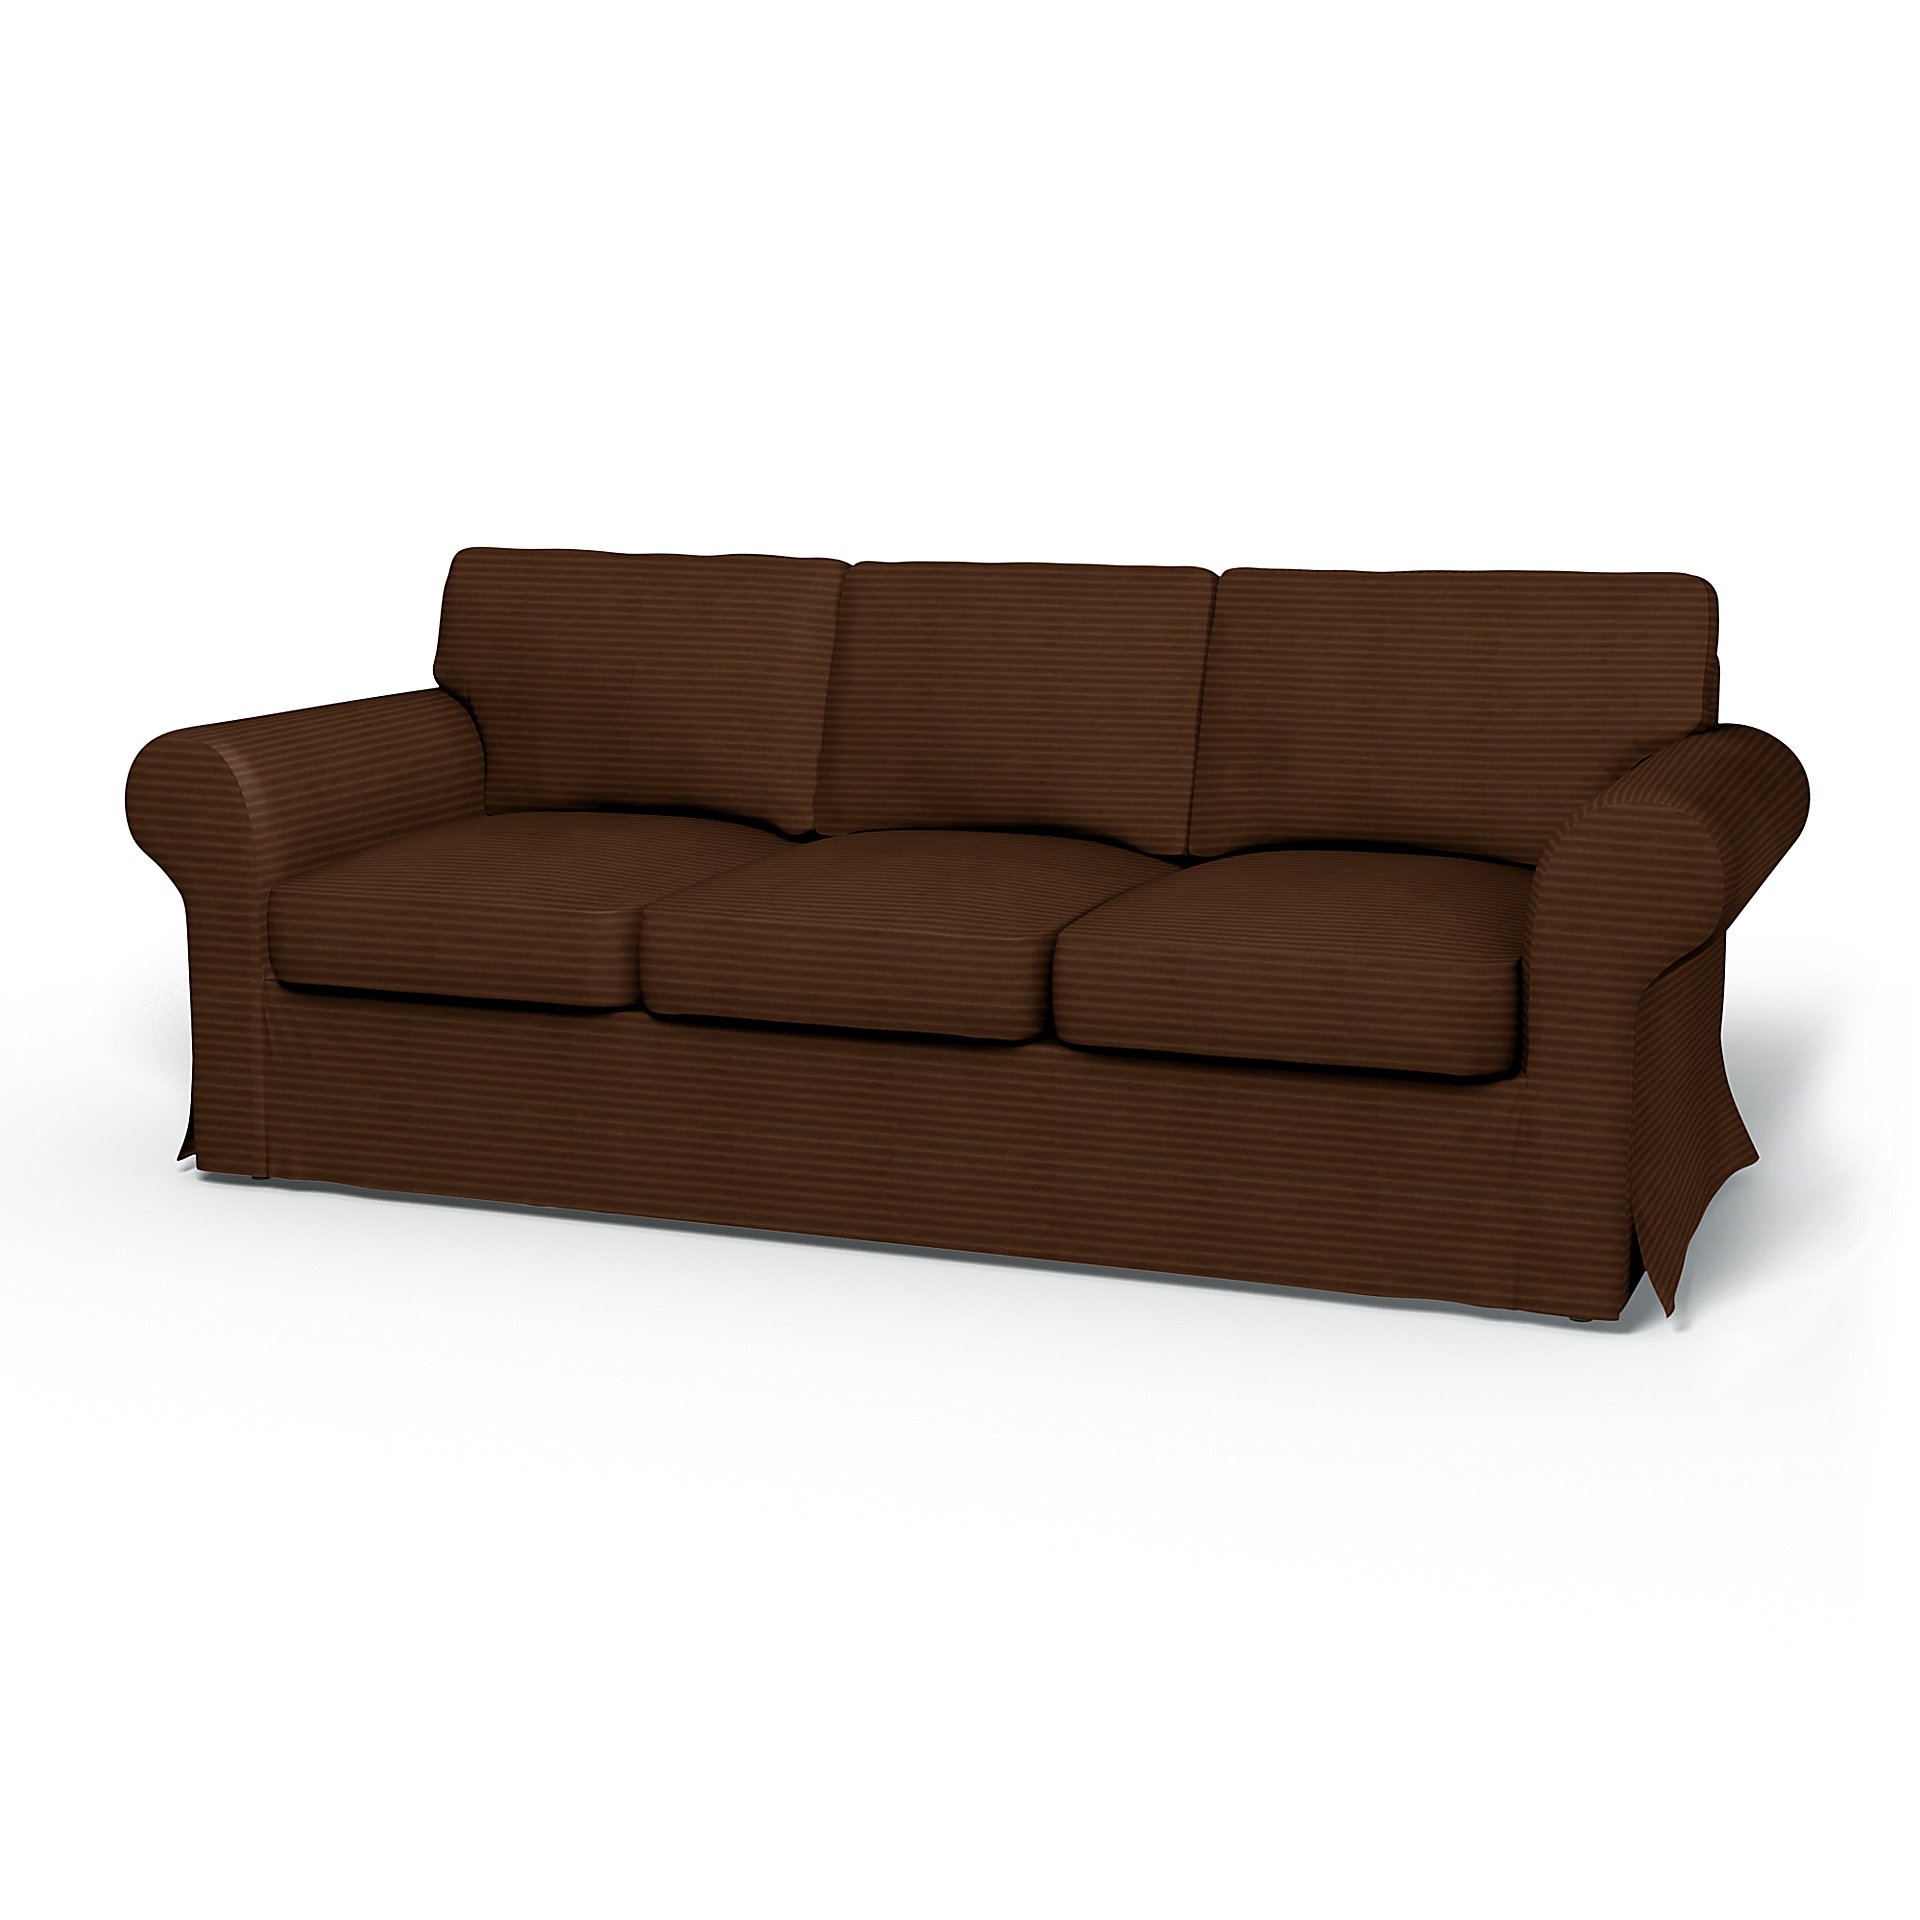 IKEA - Ektorp 3 Seater Sofa Bed Cover, Chocolate Brown, Corduroy - Bemz